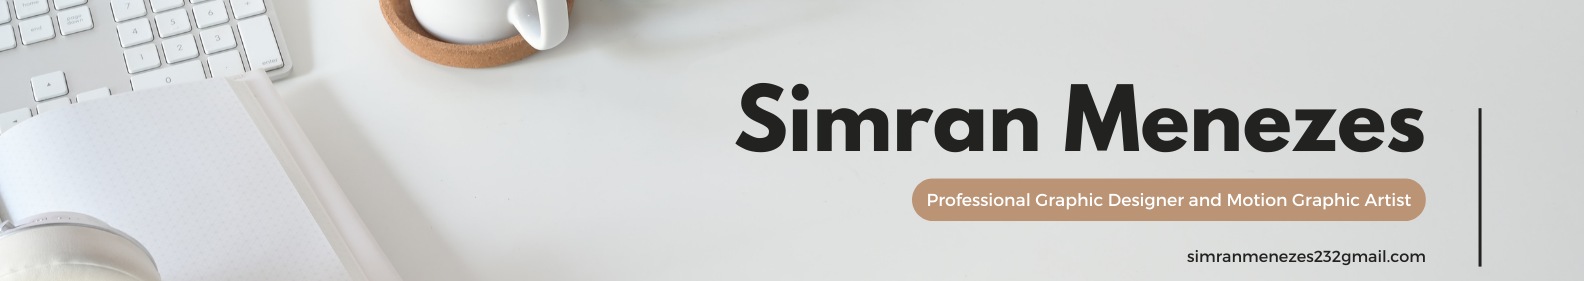 Banner de perfil de Simran Menezes